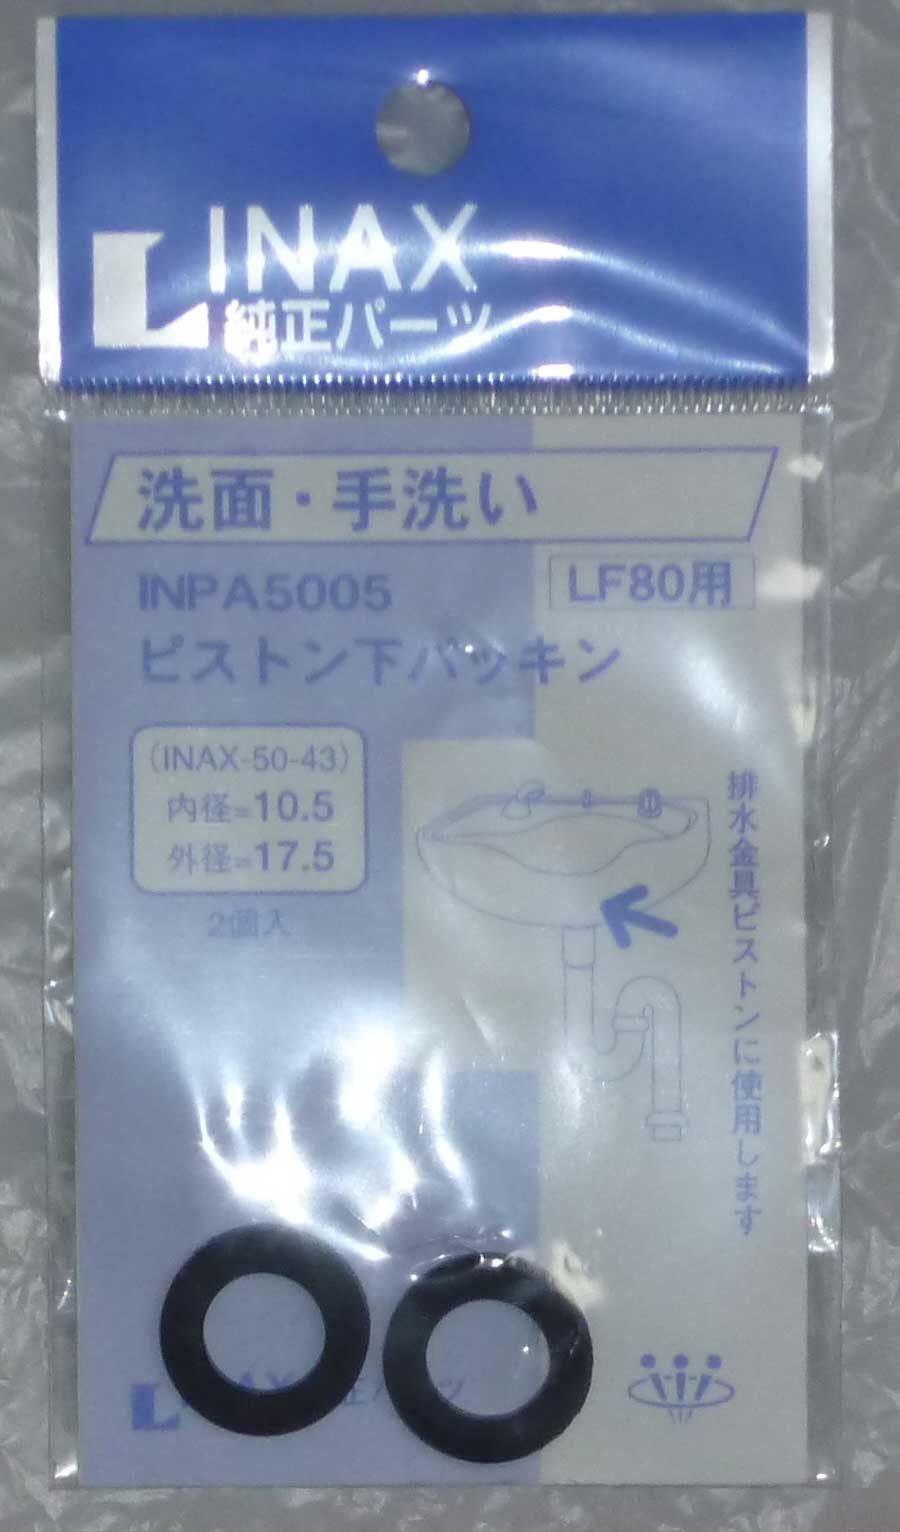 INPA5005 LF80p